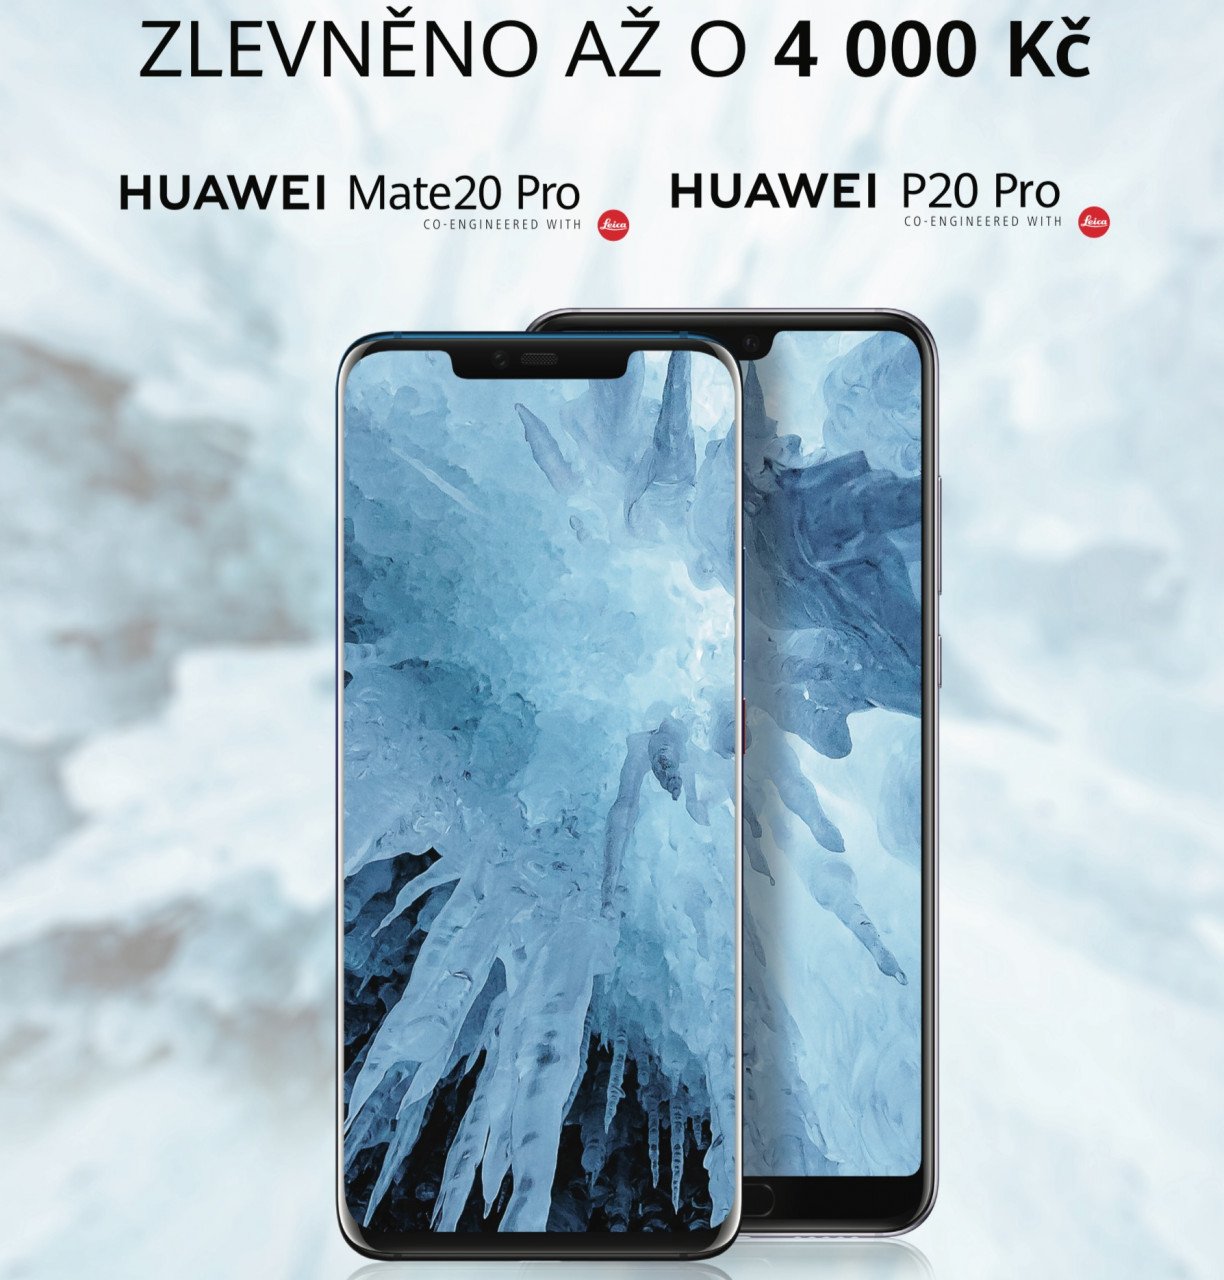 Huawei promo akce